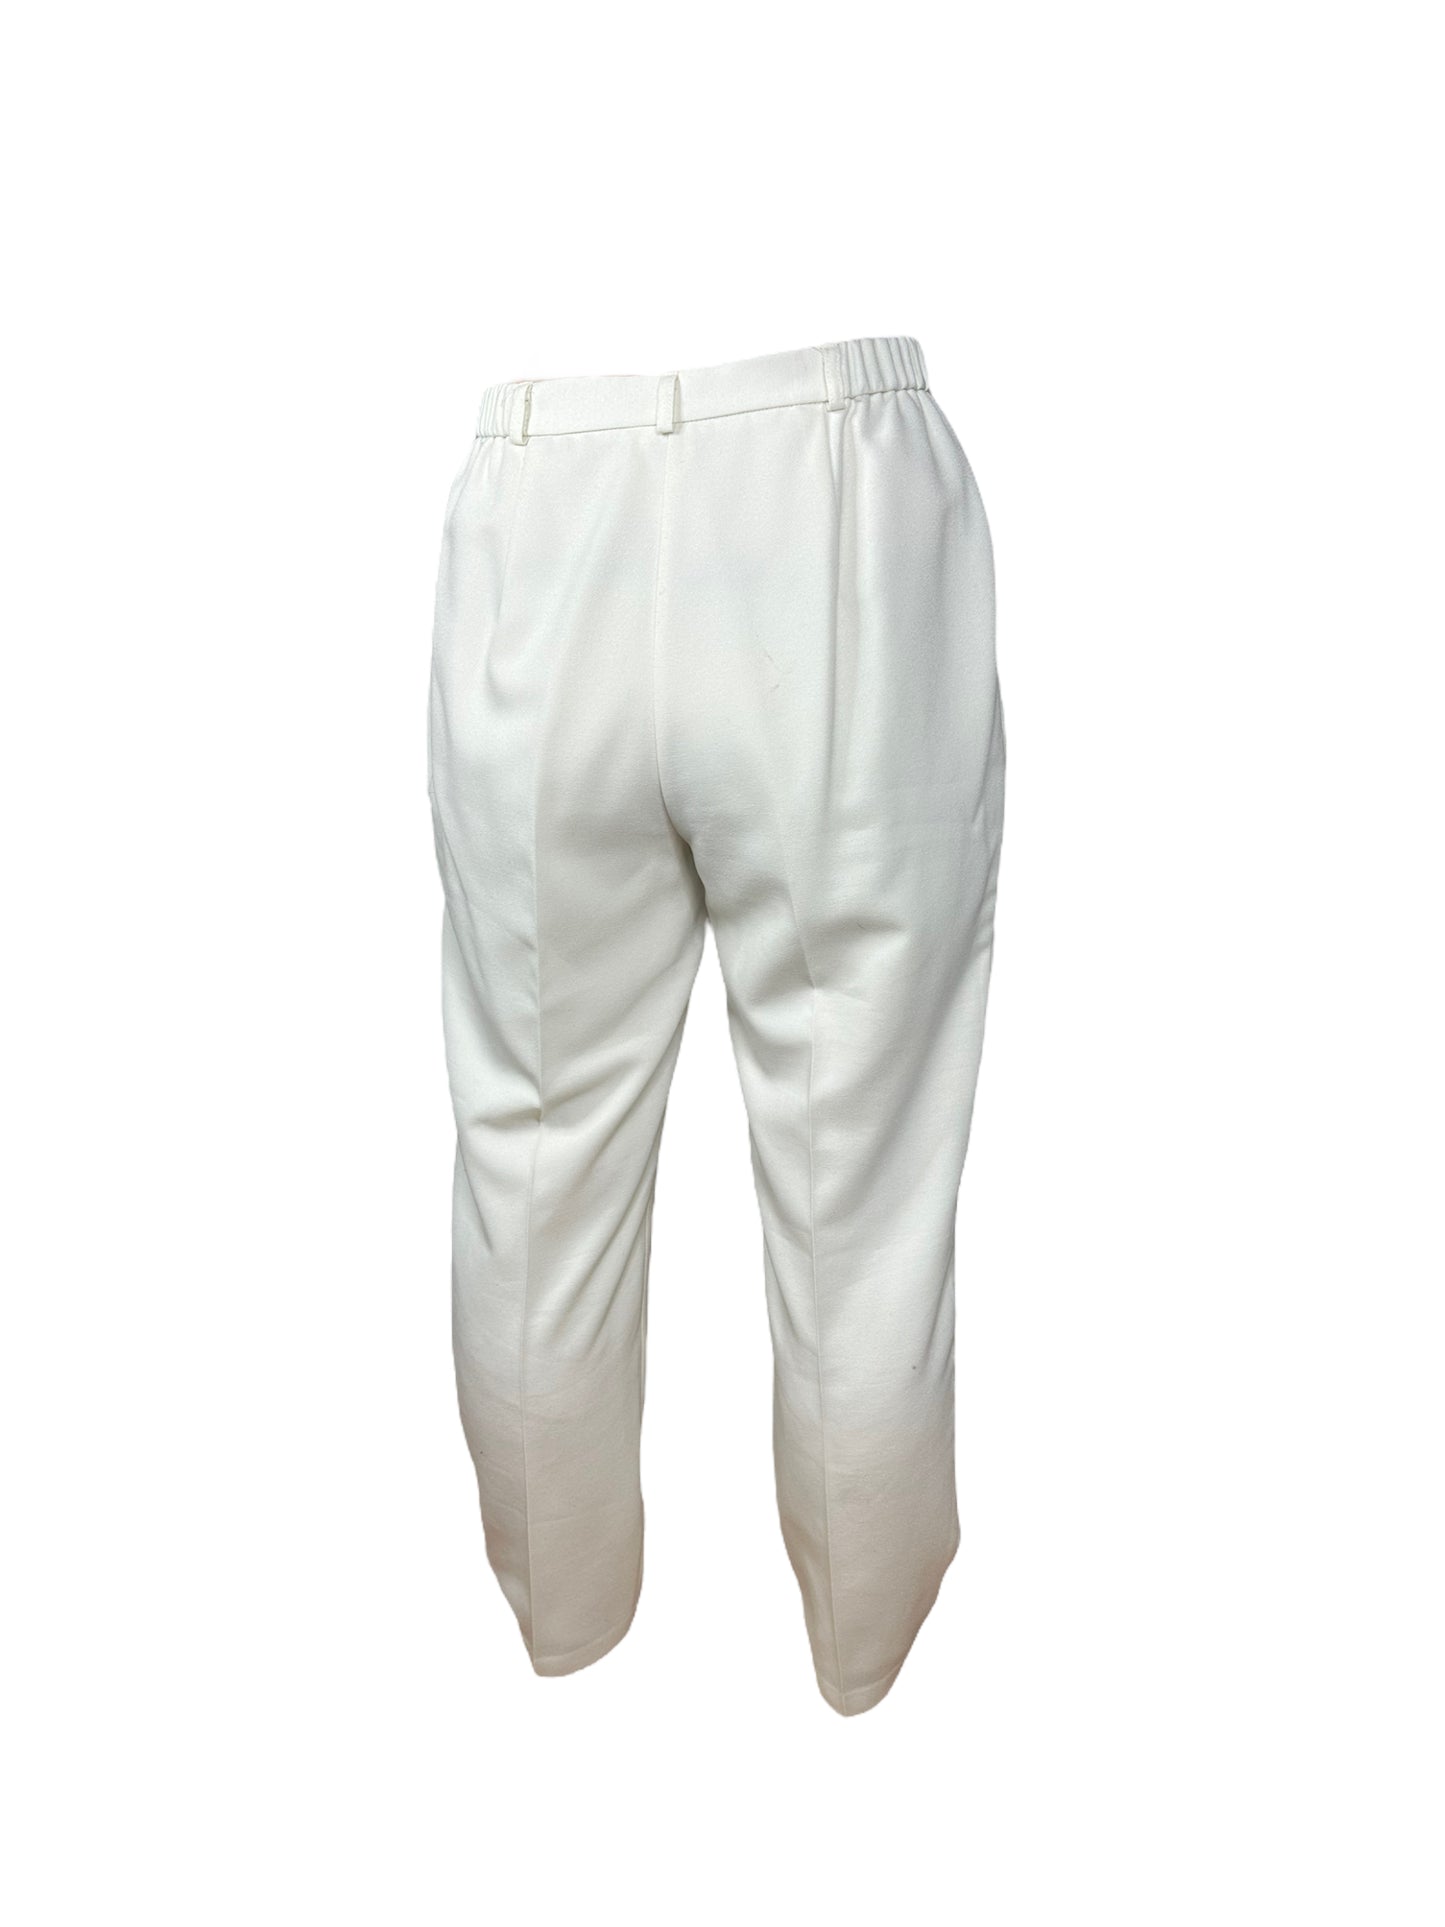 “KORET Petites” Cream Suit Pants (16)